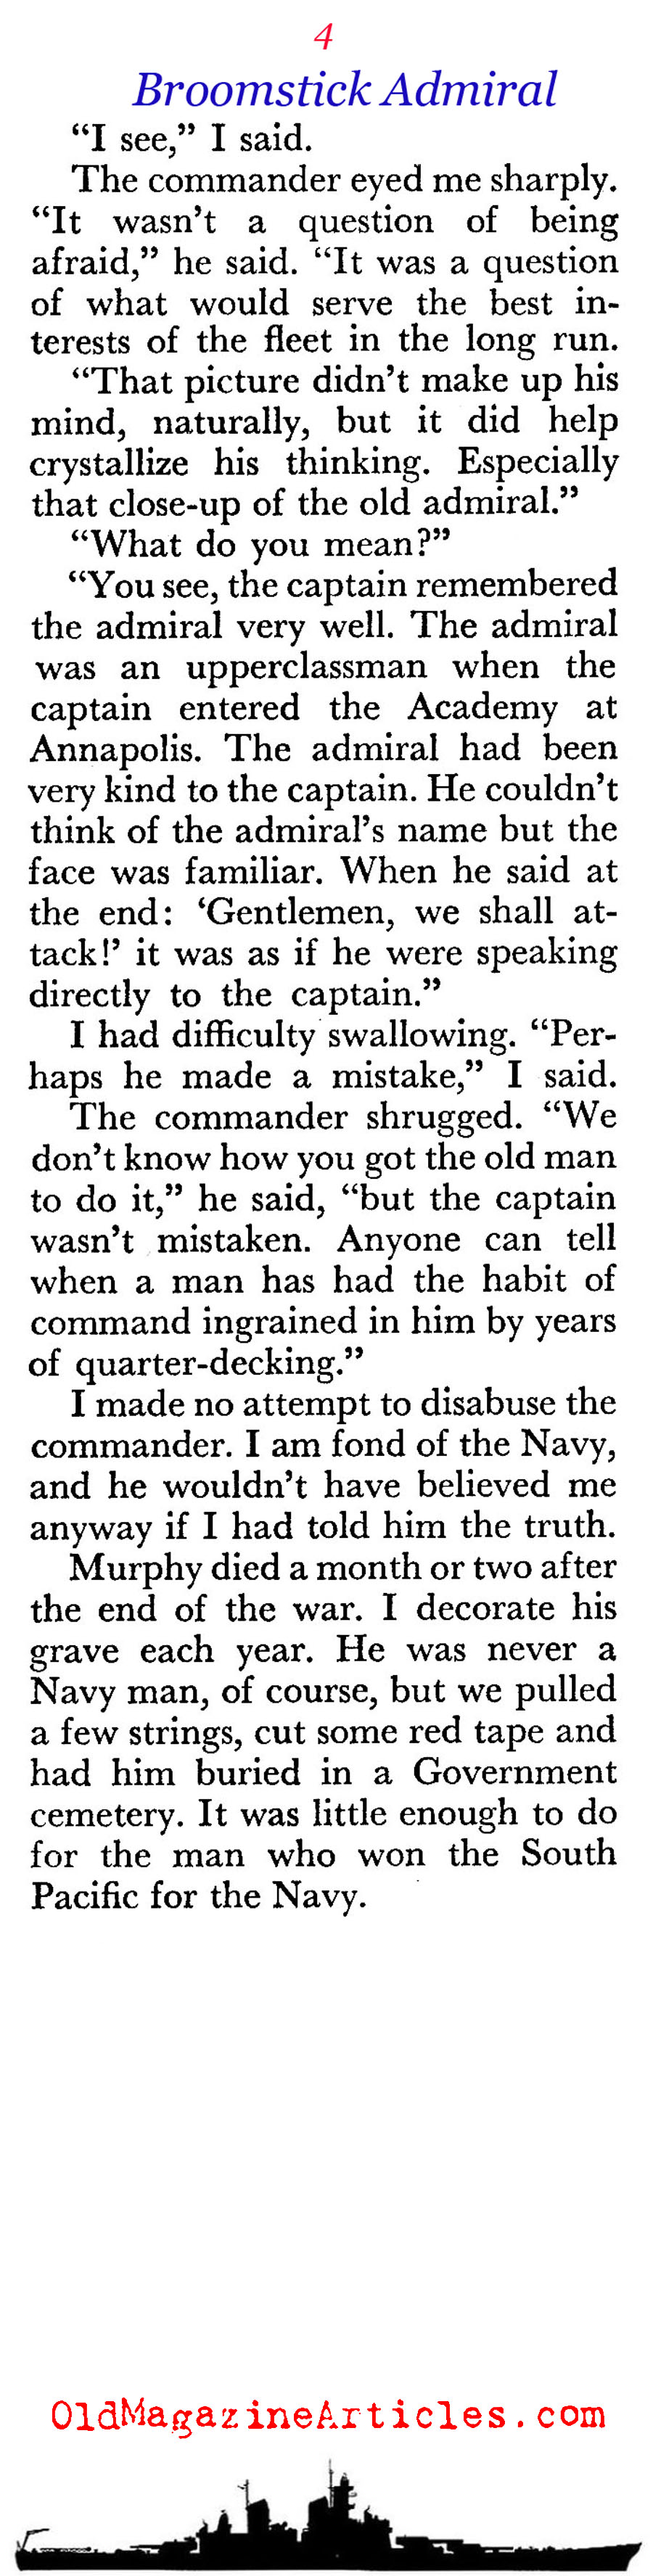 The Navy Training Film that Won A Naval Engagement (Coronet Magazine, 1959)